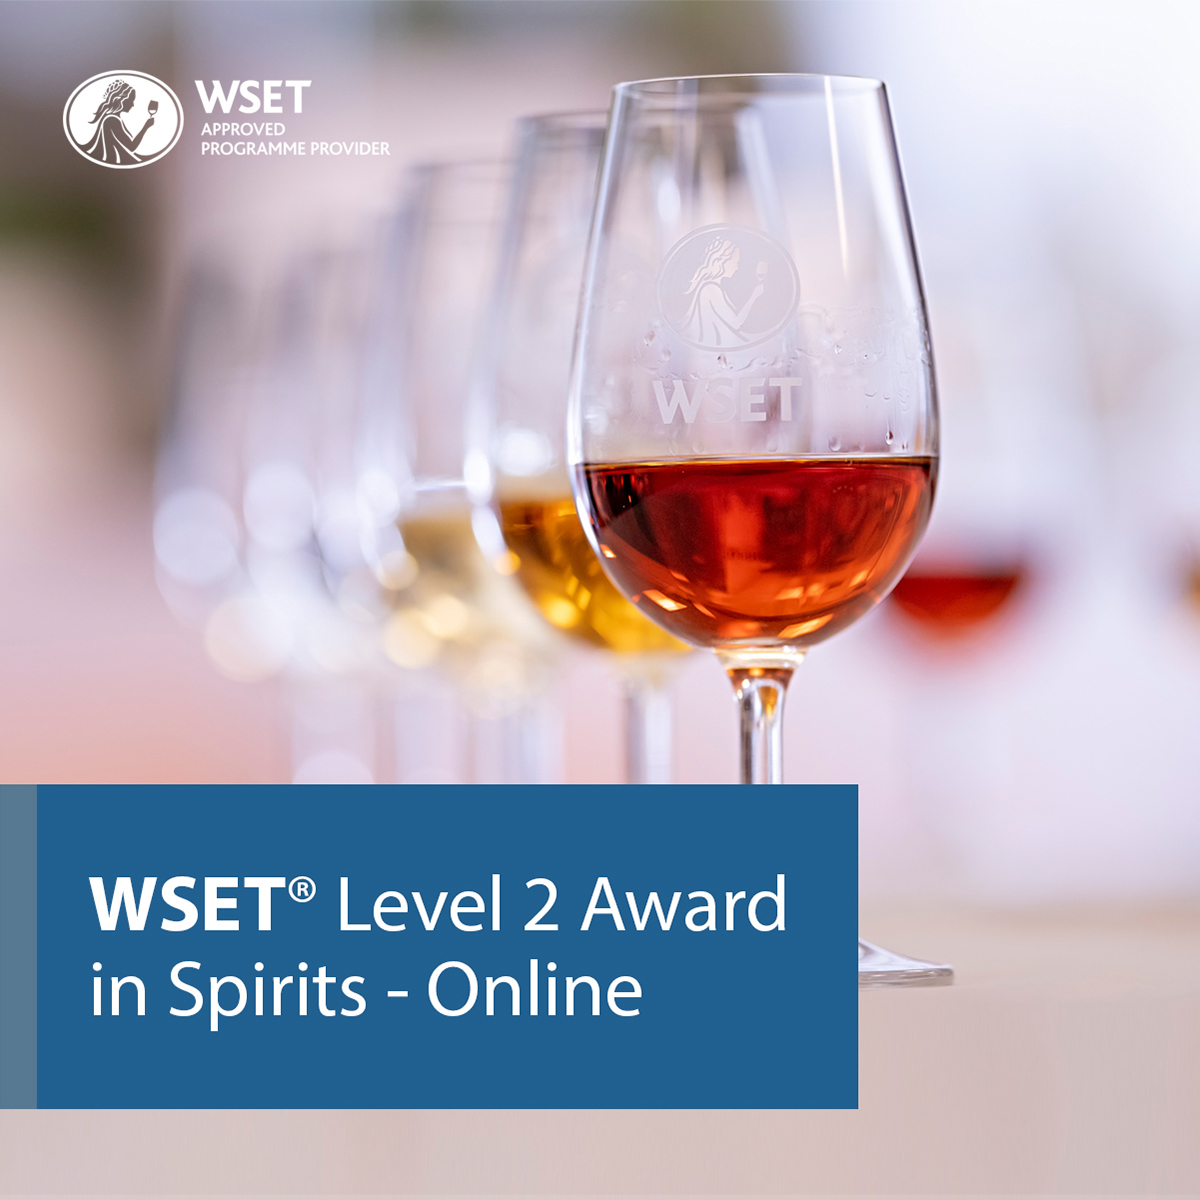 WSET Level 2 Award in Spirits - August 5-7, 2019